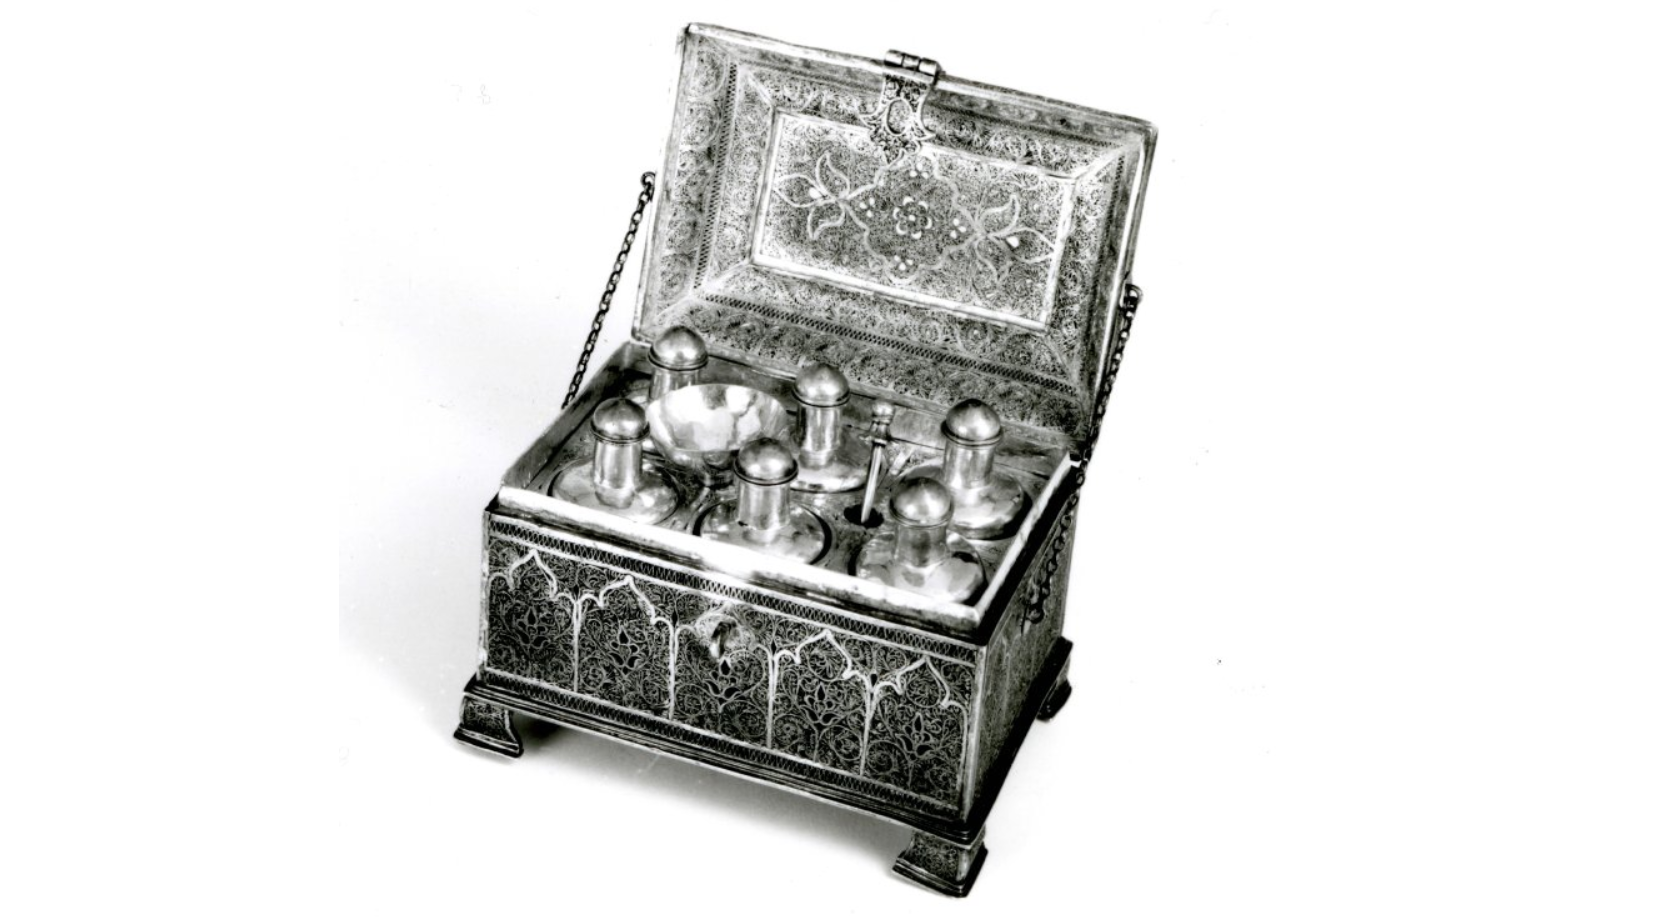 Tipu Sultan’s perfume box